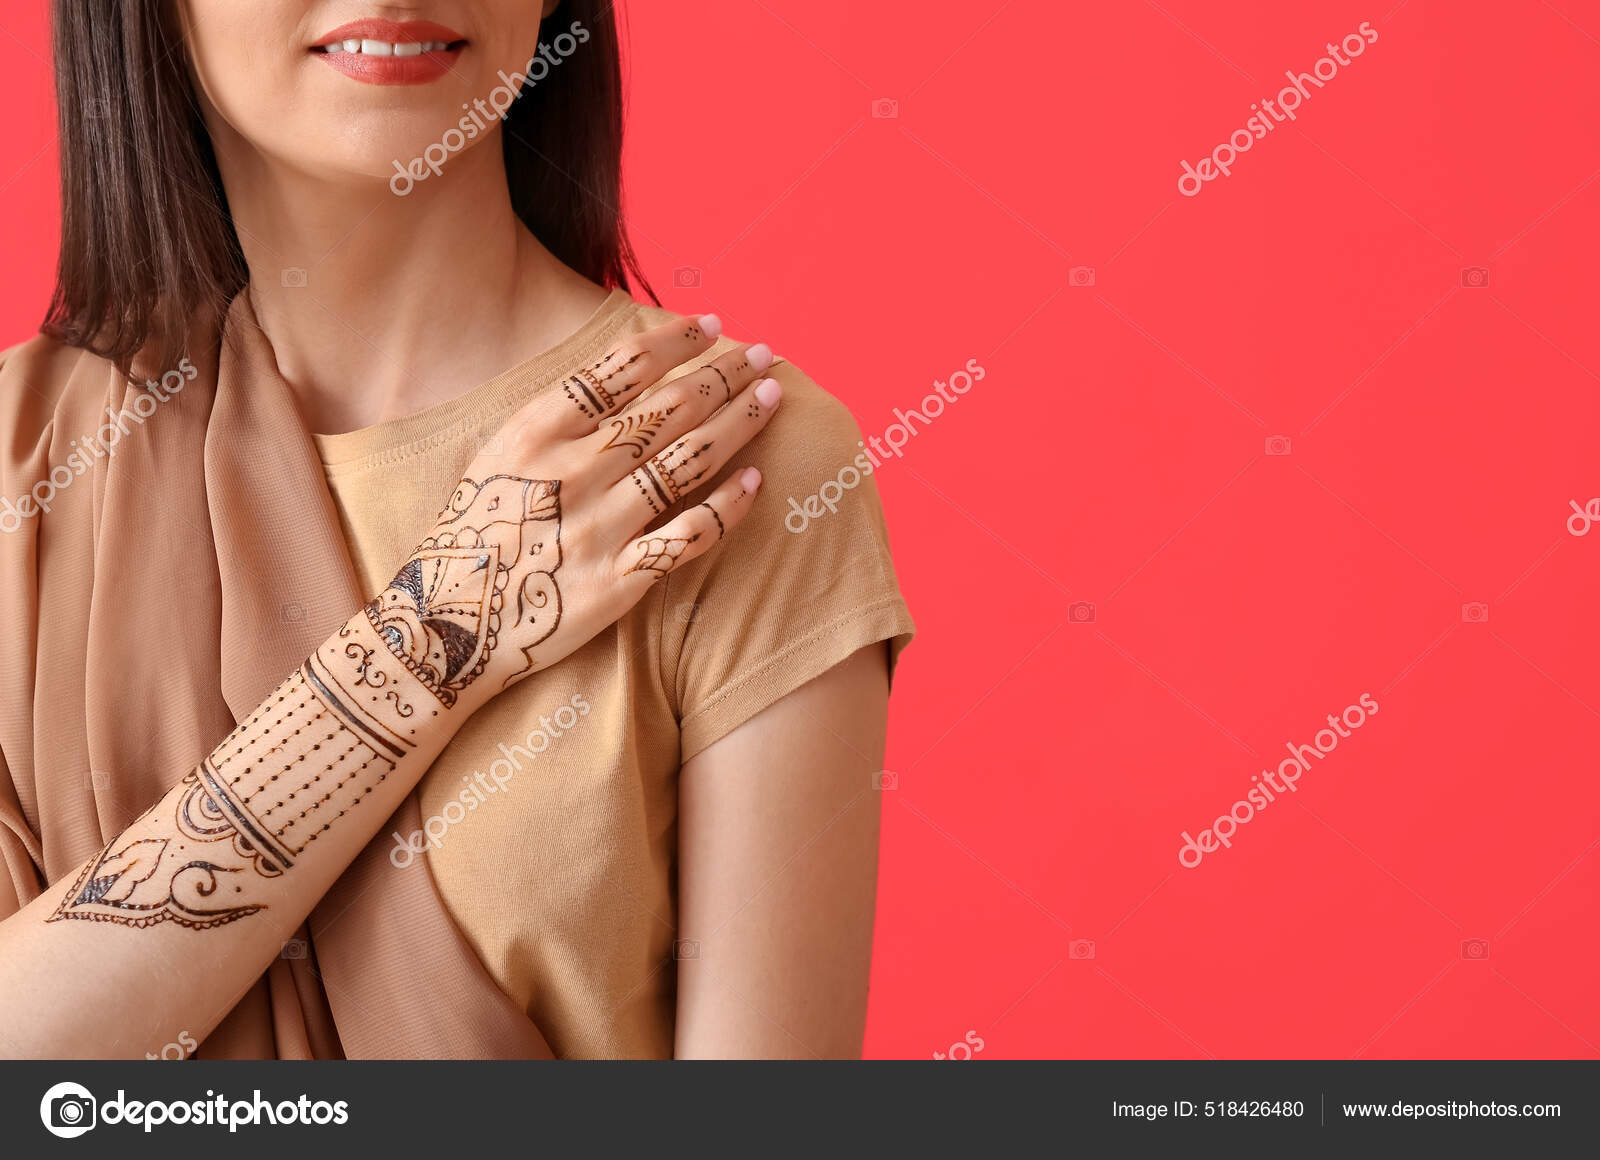 Armband tattoo | Arm band tattoo, Wrist tattoos for guys, Forearm band  tattoos